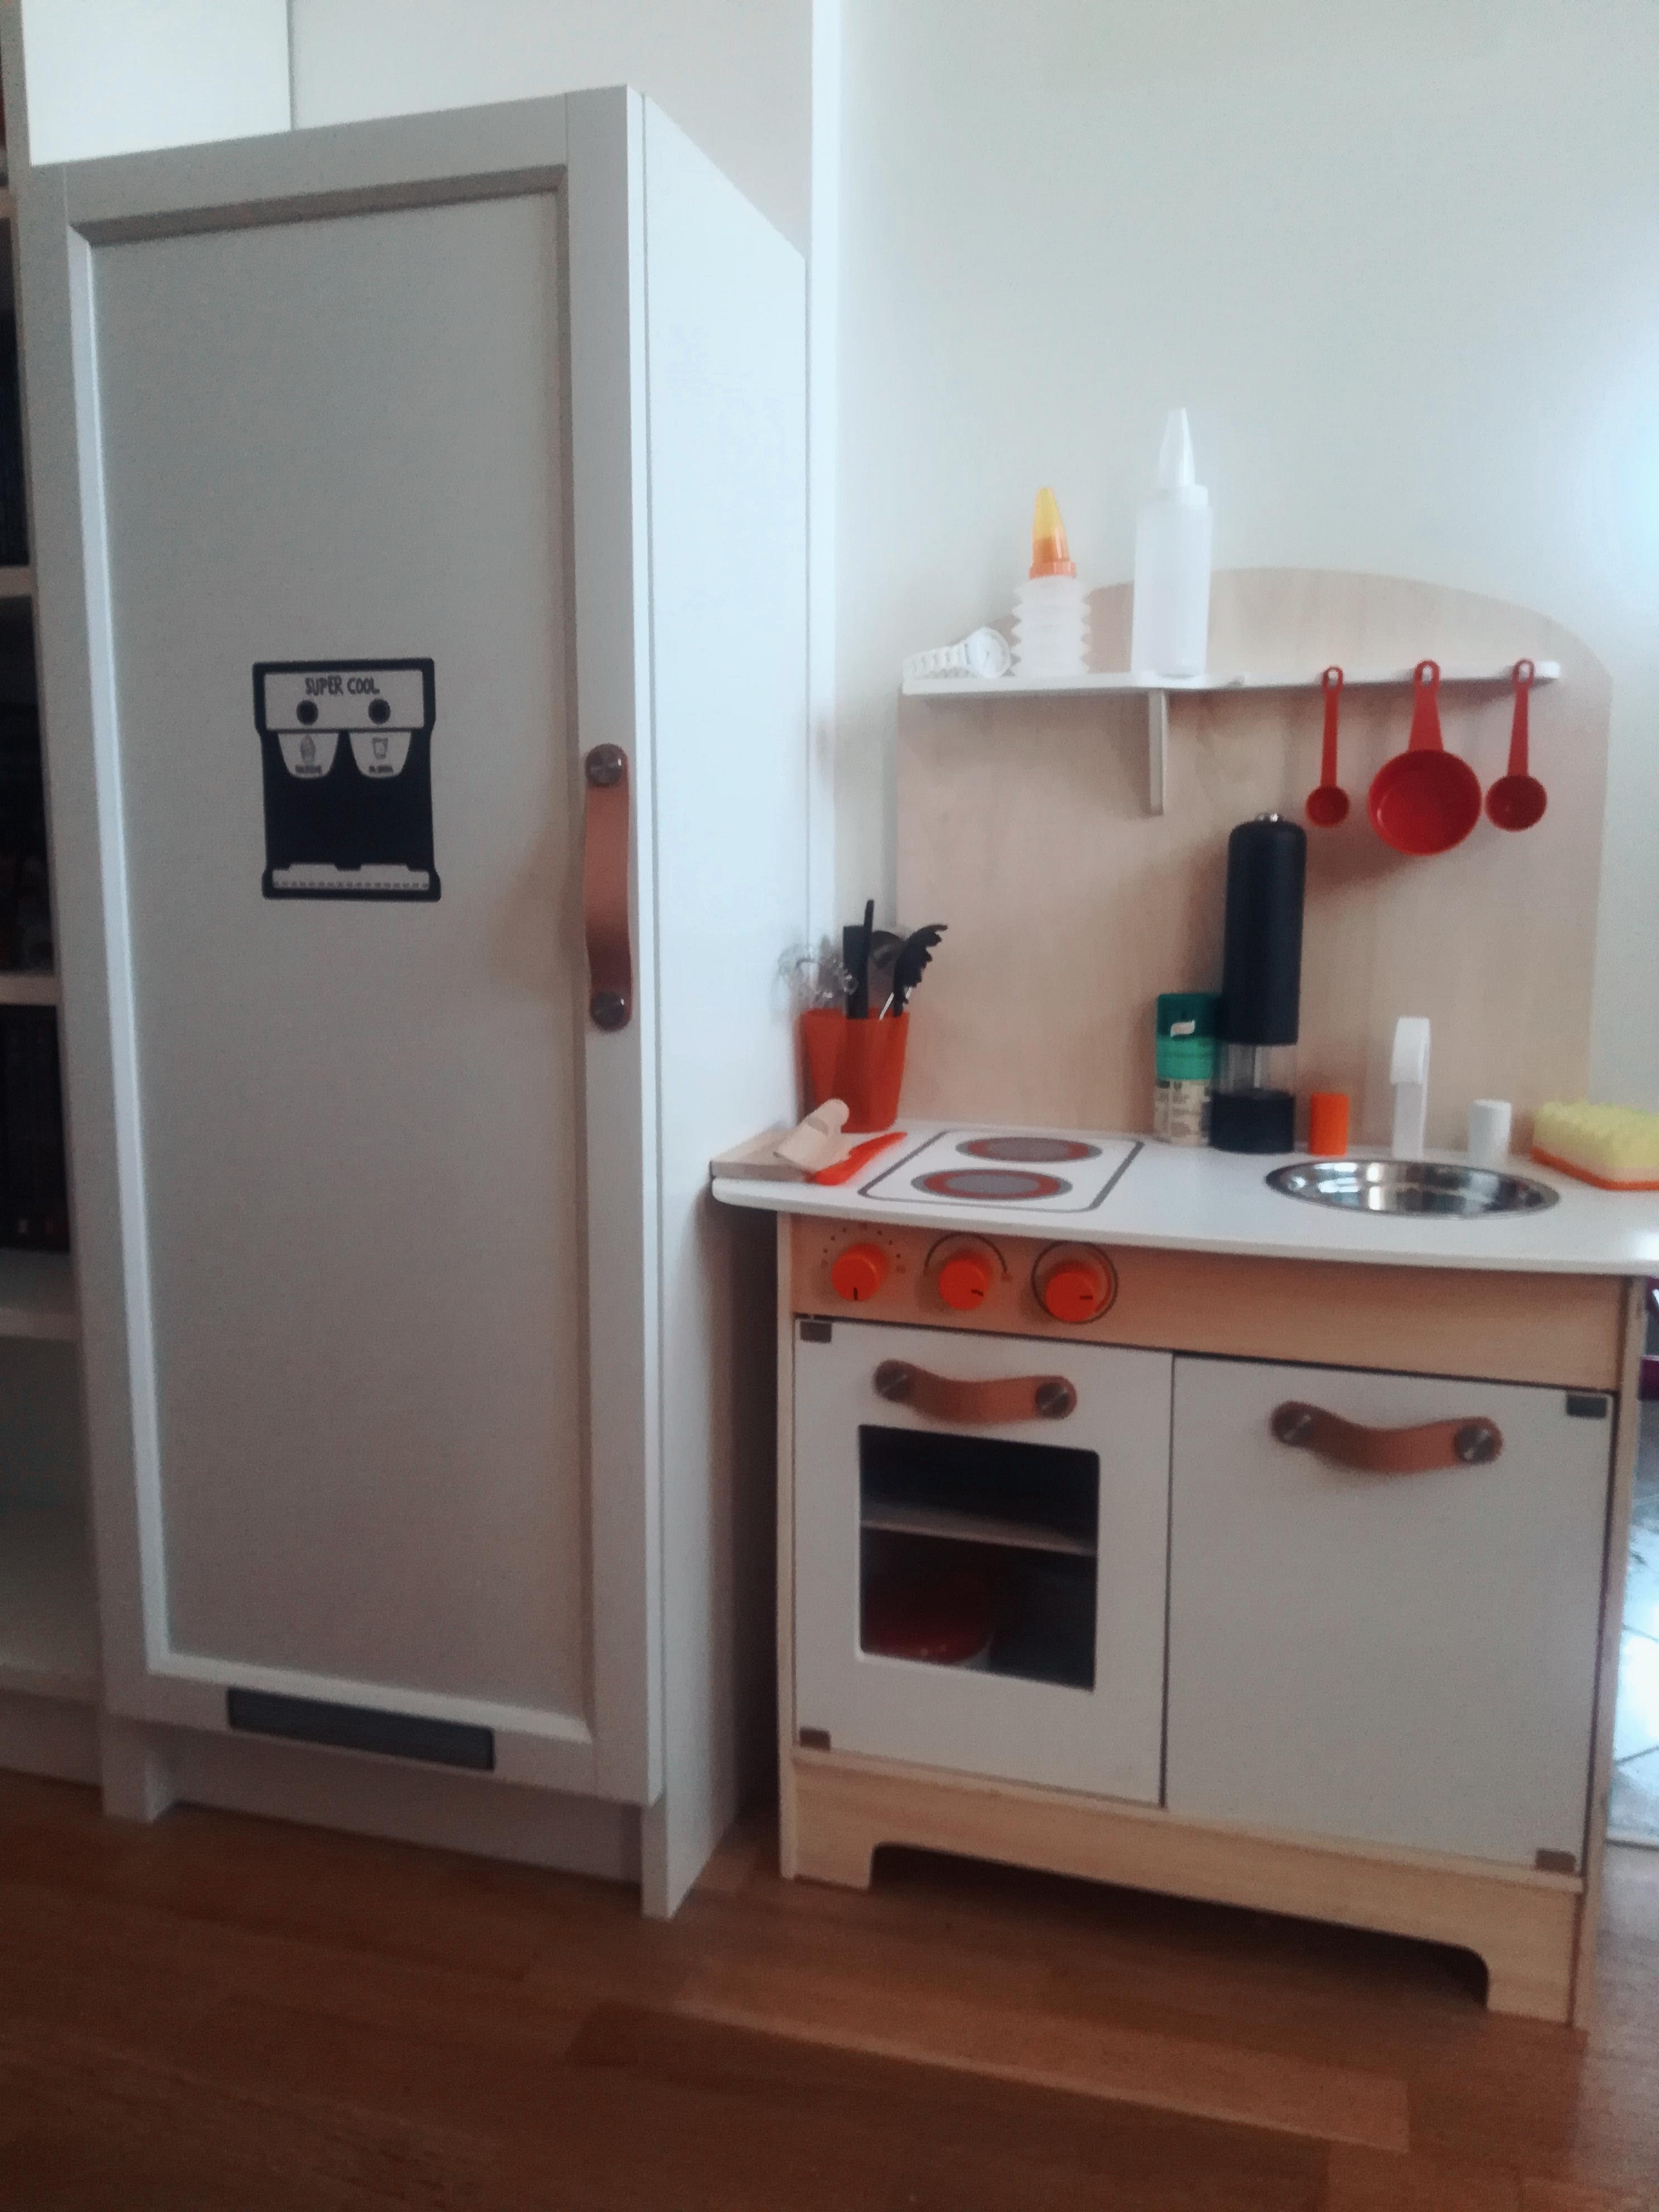 Kinderküche mit Kühlschrank 1/2
#kinderküche #diy #ikeahack